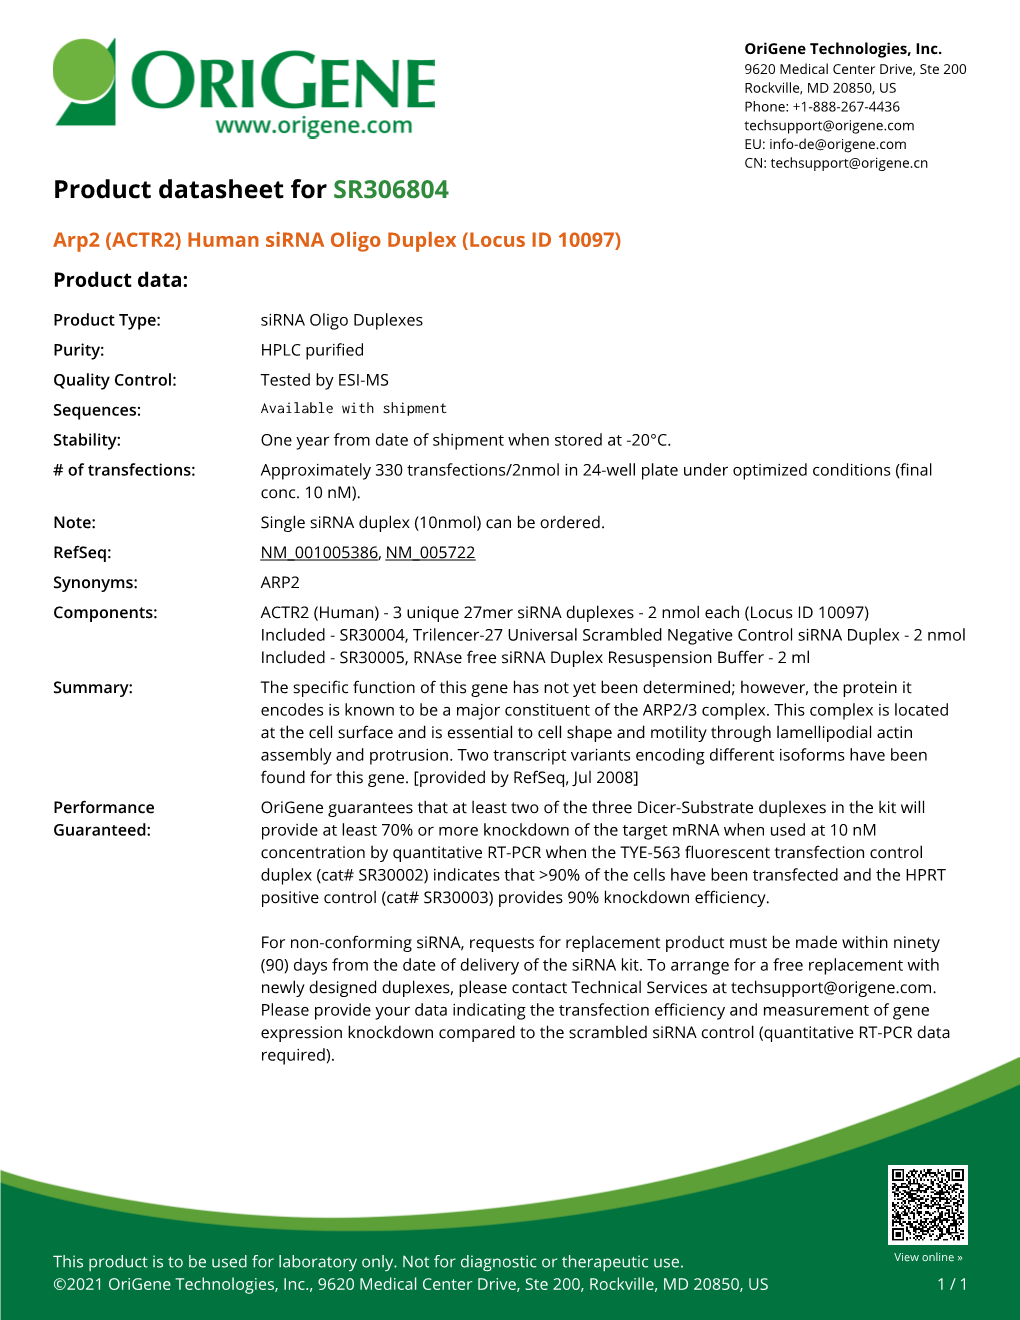 Arp2 (ACTR2) Human Sirna Oligo Duplex (Locus ID 10097) Product Data